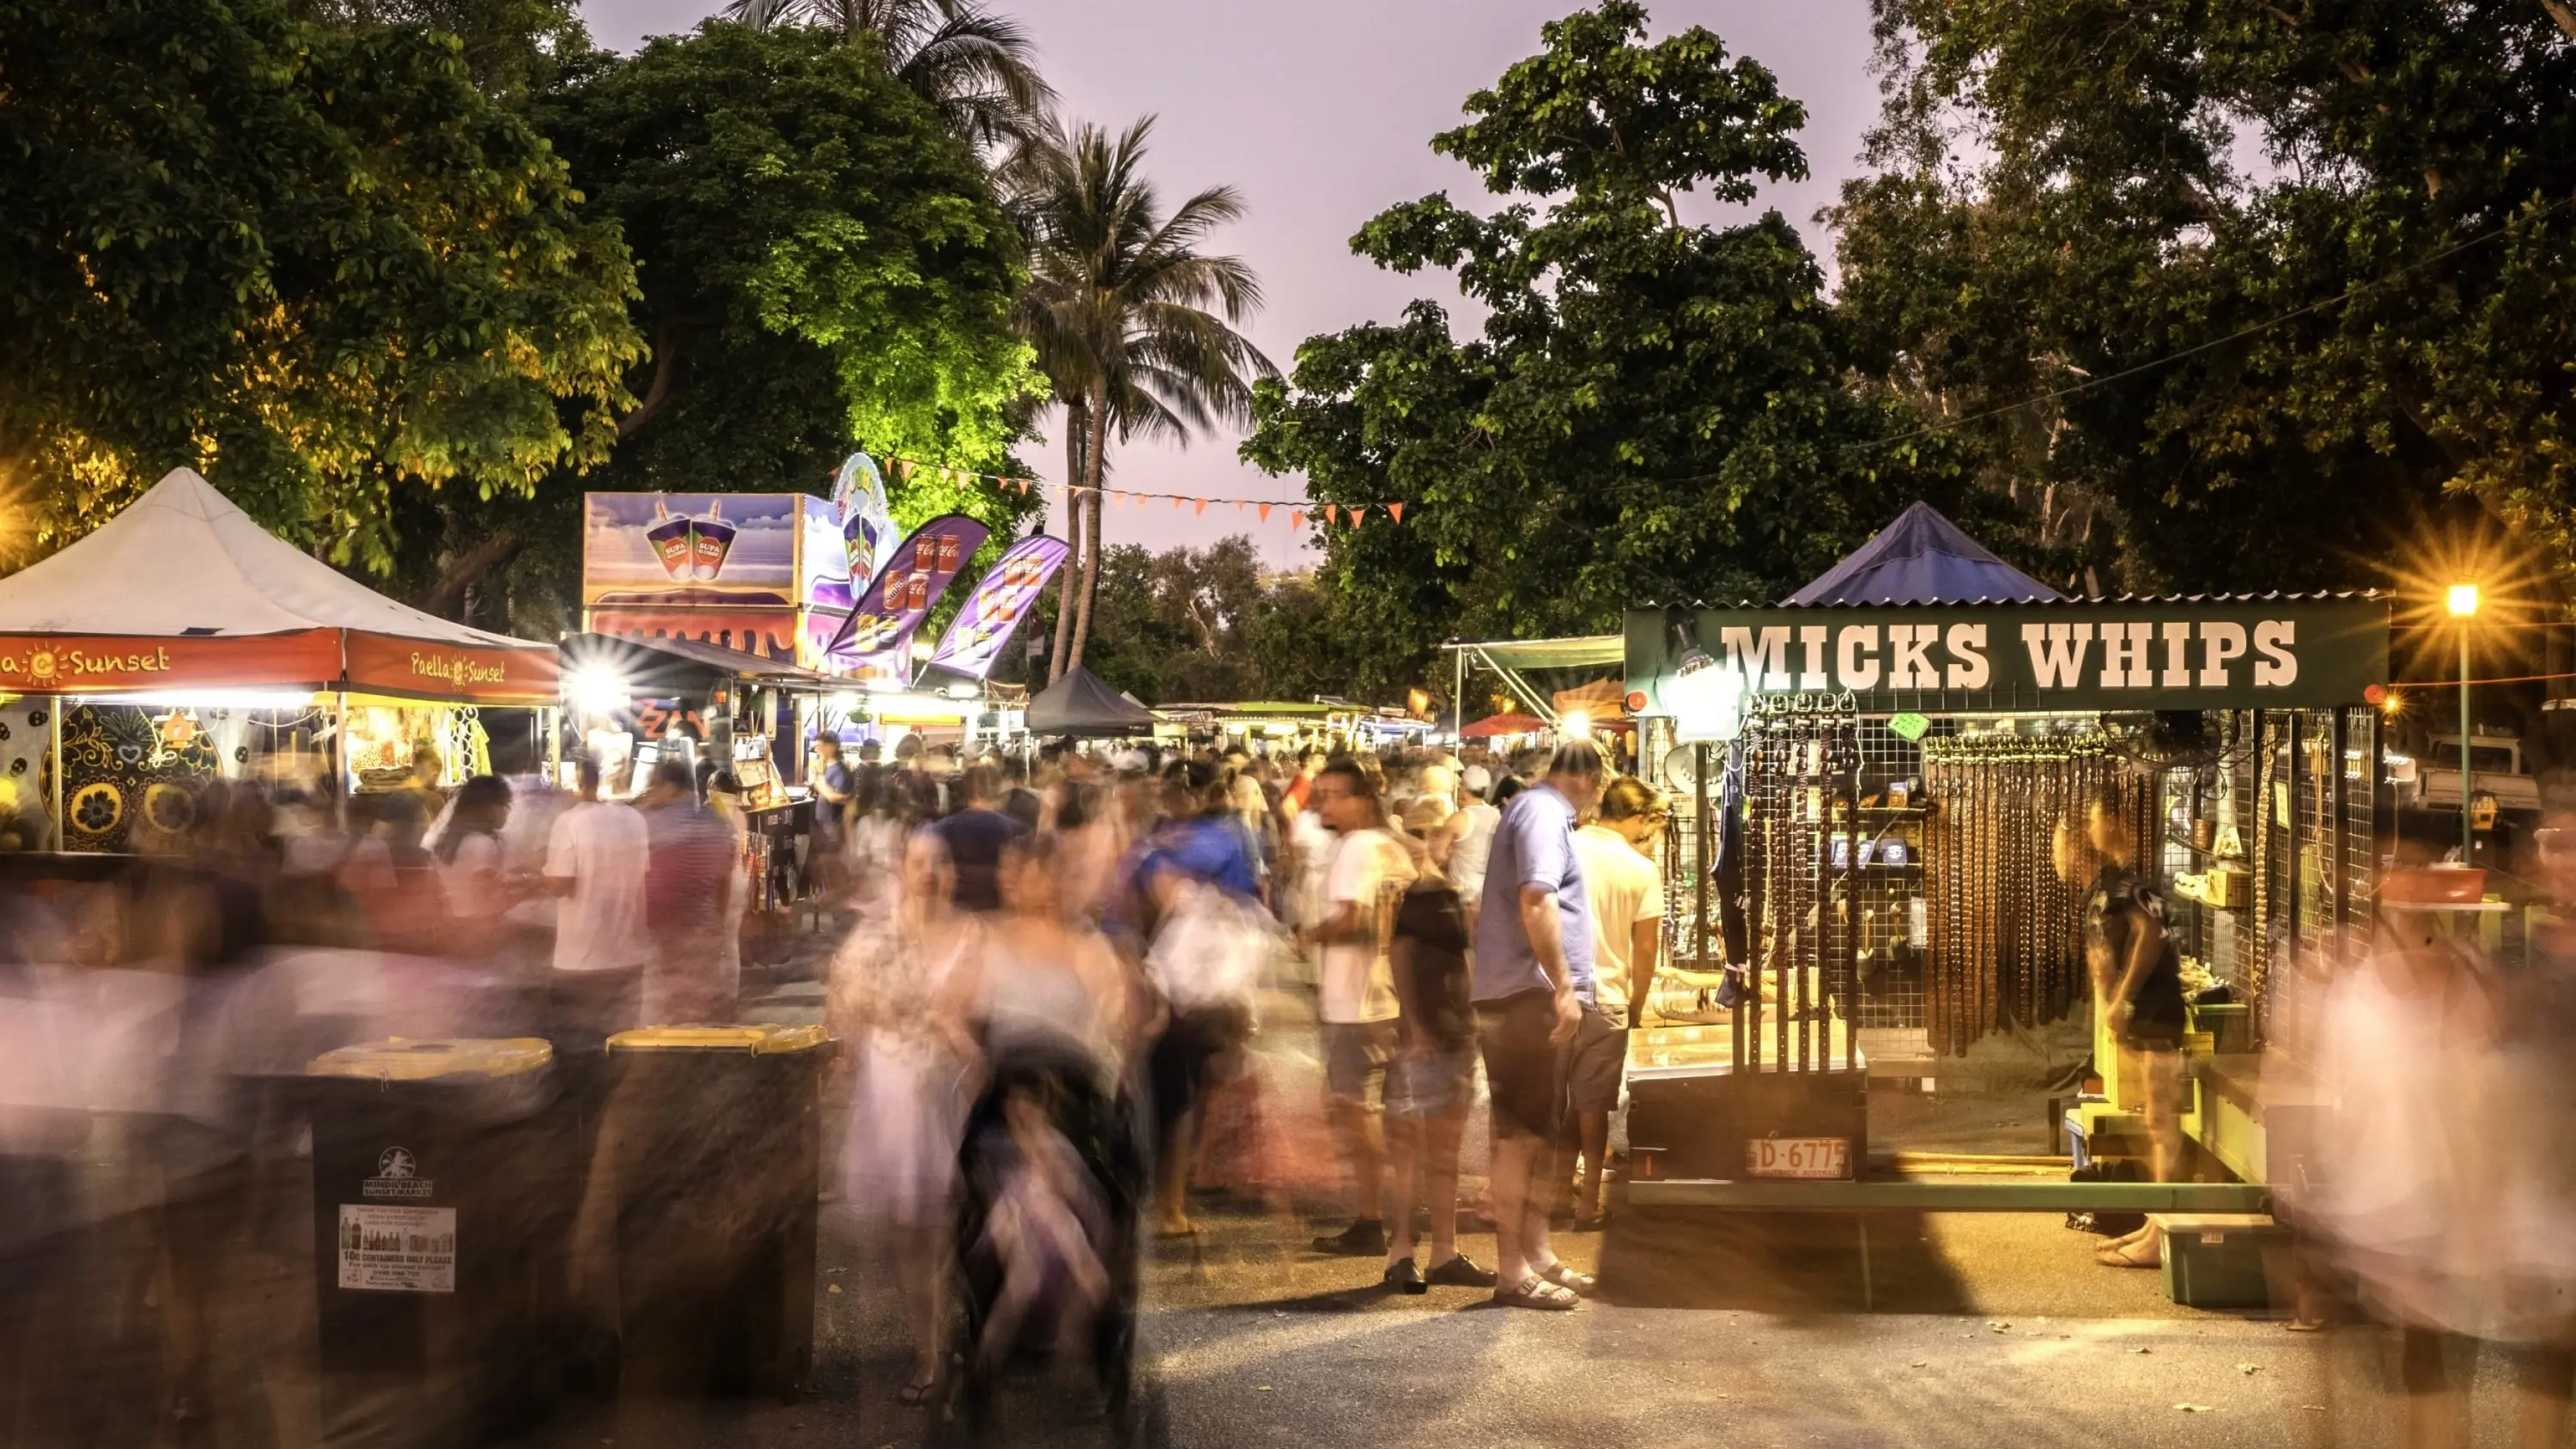 Crowds and stalls at Mindil Beach Sunset Market, Darwin. Image credit: Tourism NT/Helen Orr